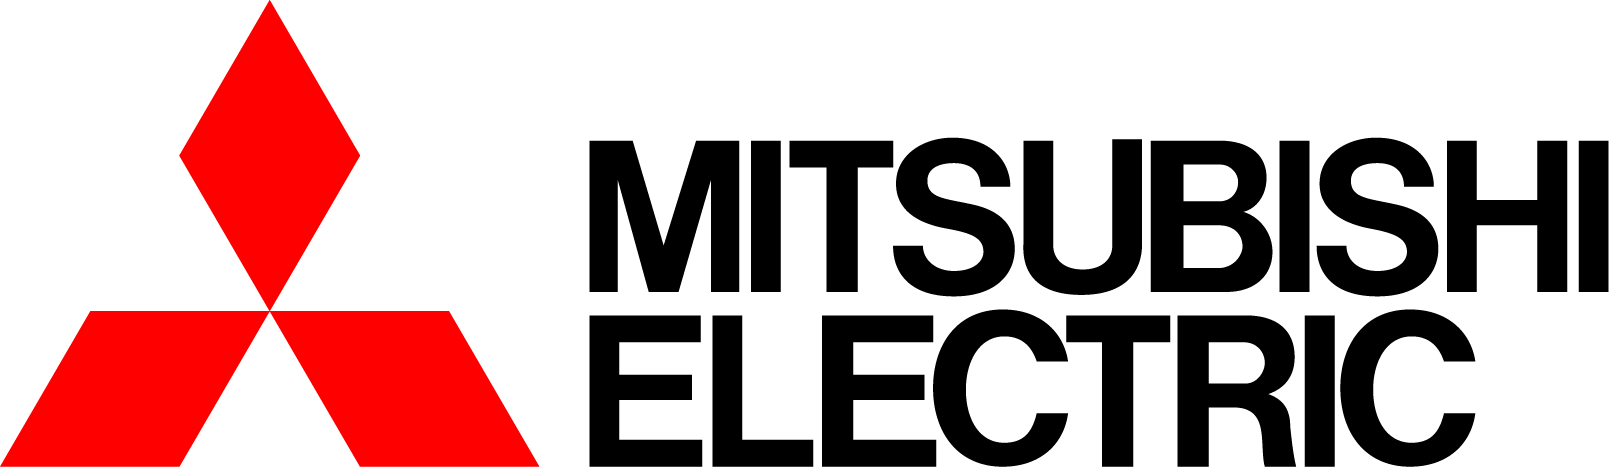 mitsubishi-electric-logo-54424.png